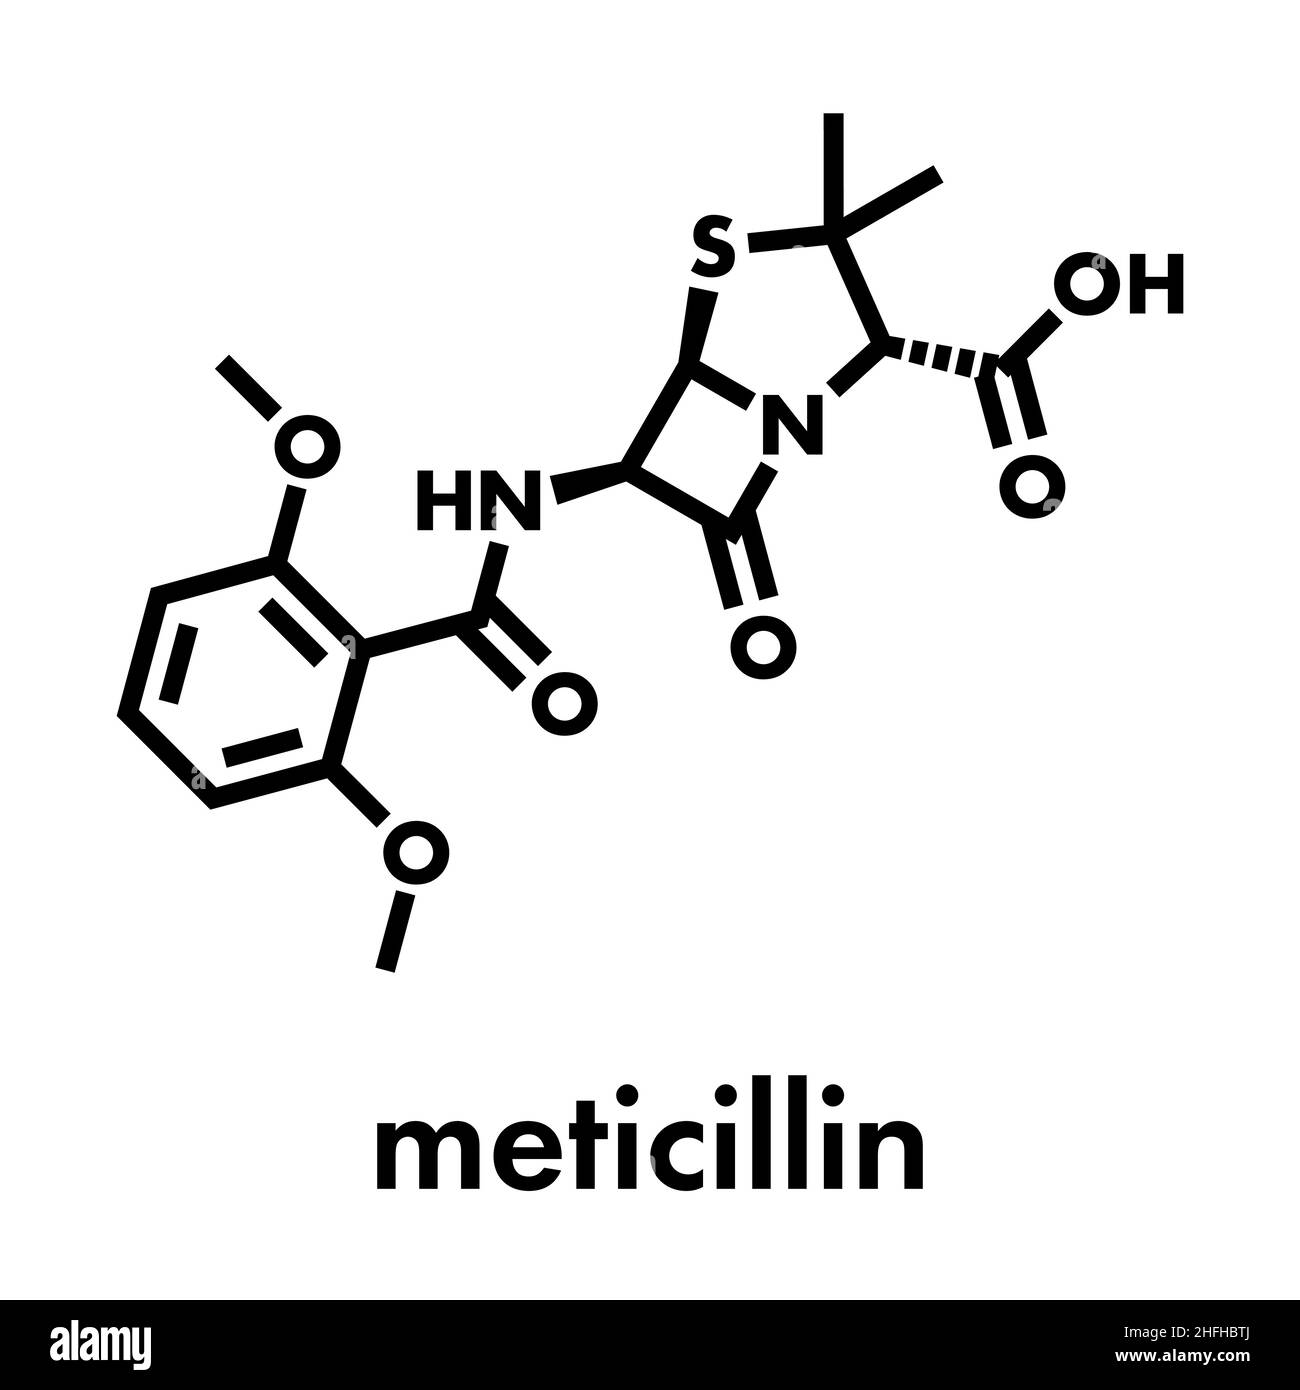 Methicillin Antibiotikum Medikament (beta-Lactam class) Molekül. MRSA ist die Abkürzung für Methicillin-resistente Staphylococcus aureus. Skelettmuskulatur Formel. Stock Vektor